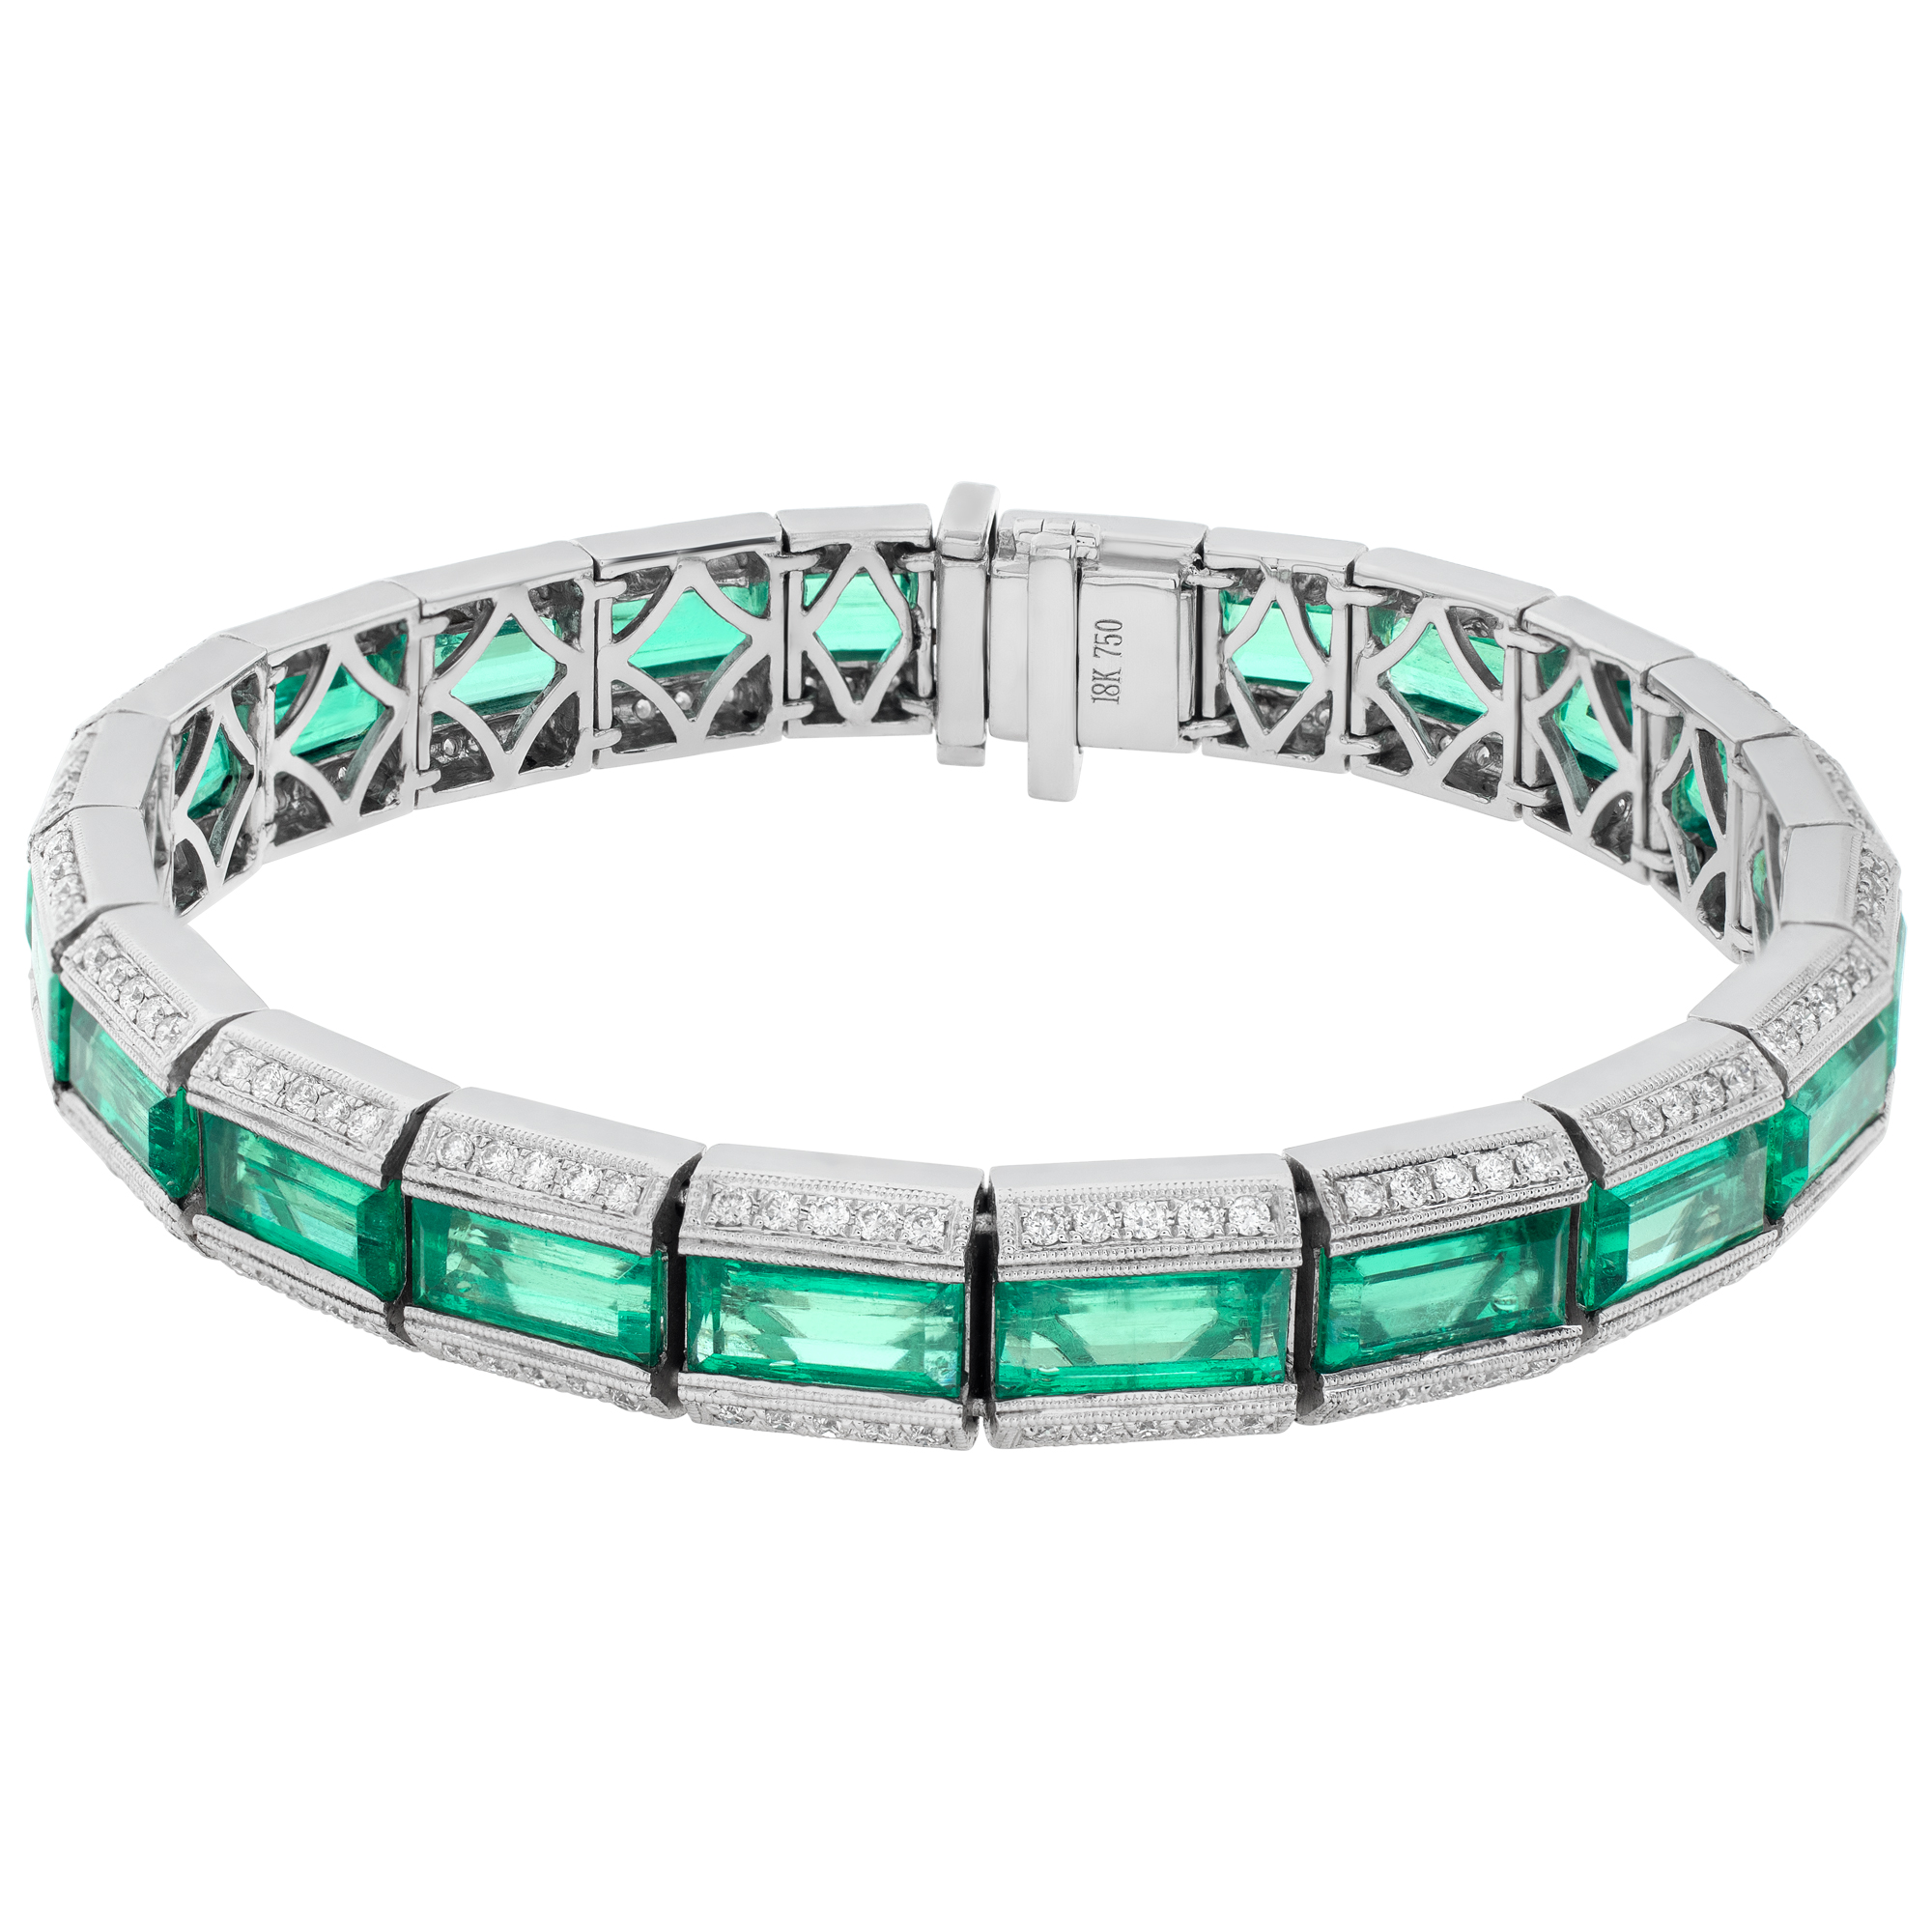 Colombian emerald cut emerald and diamond line bracelet set in 18K white gold.